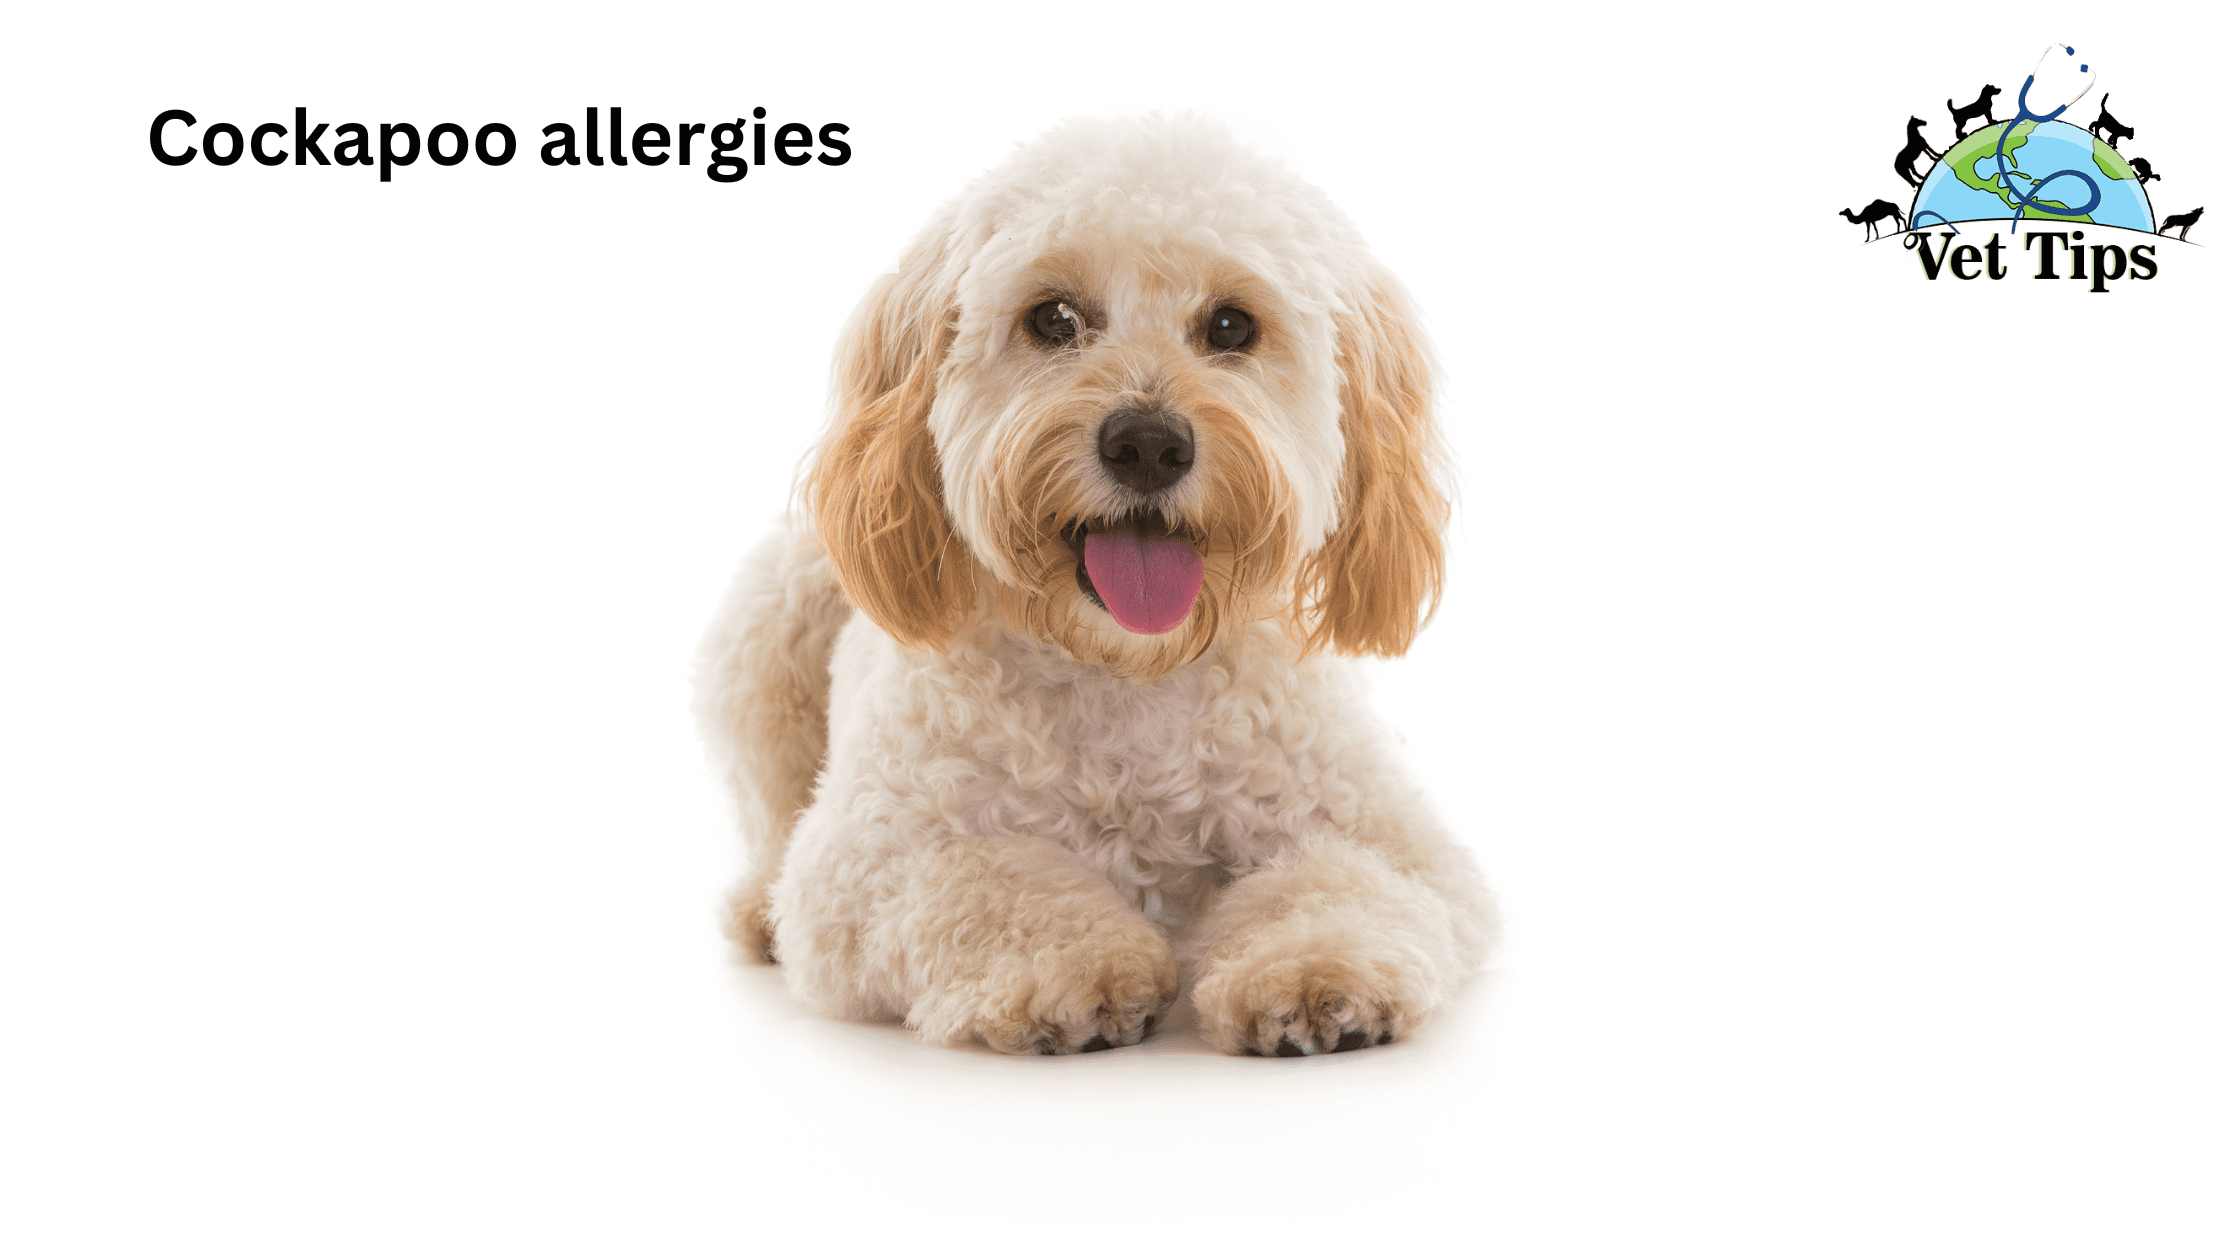 Cockapoo allergies